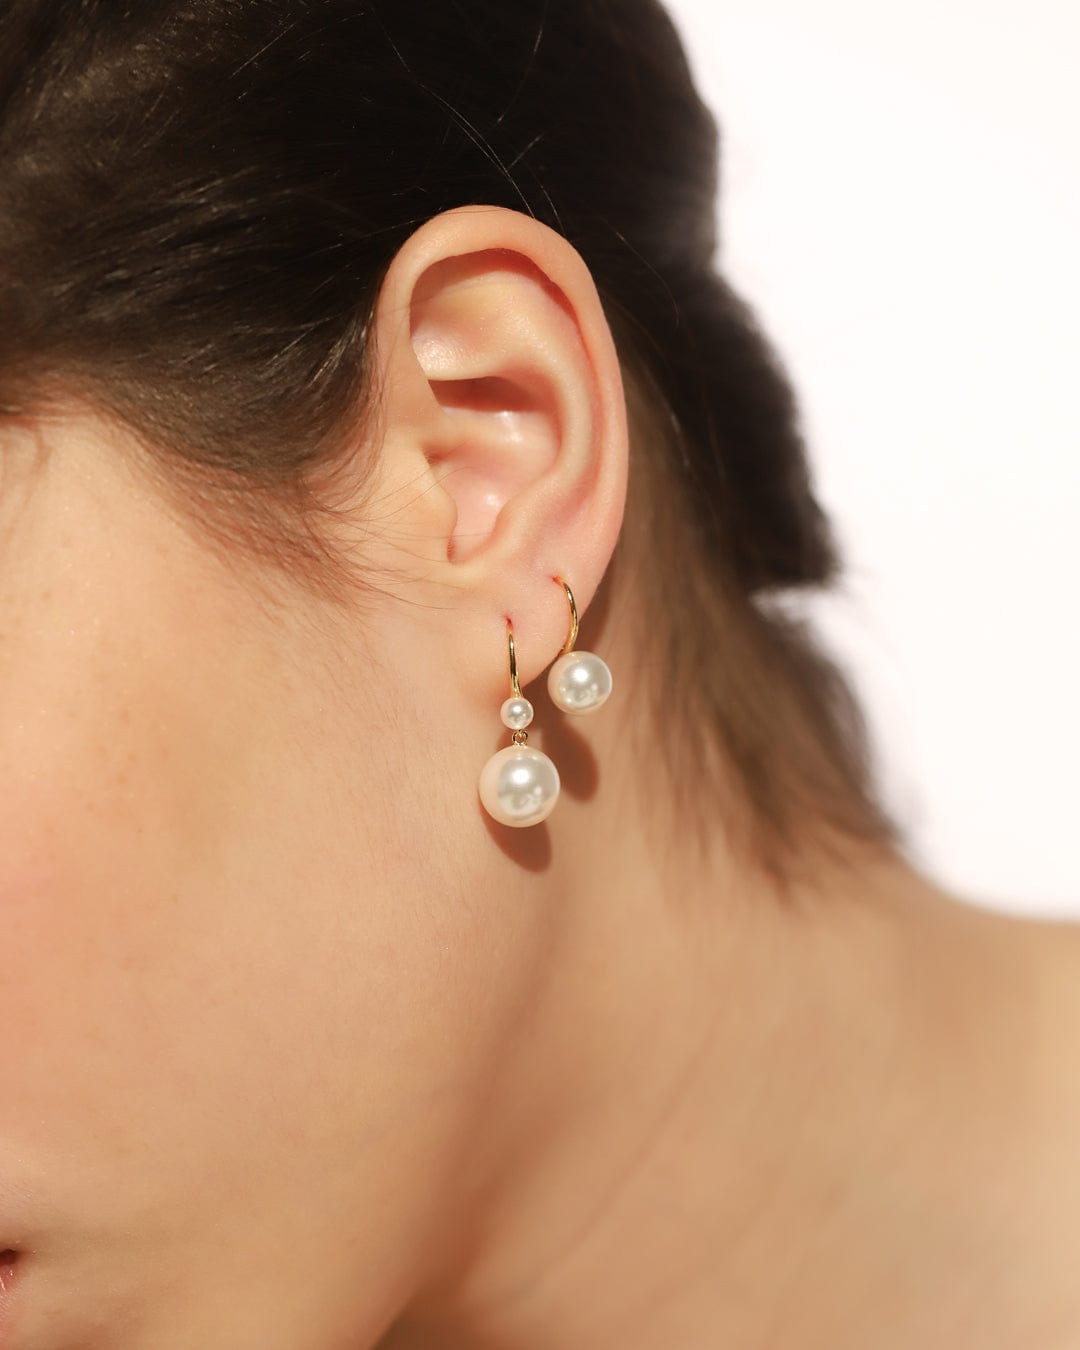 TAI JEWELRY Earrings Swarovski Pearl French Wire Earring